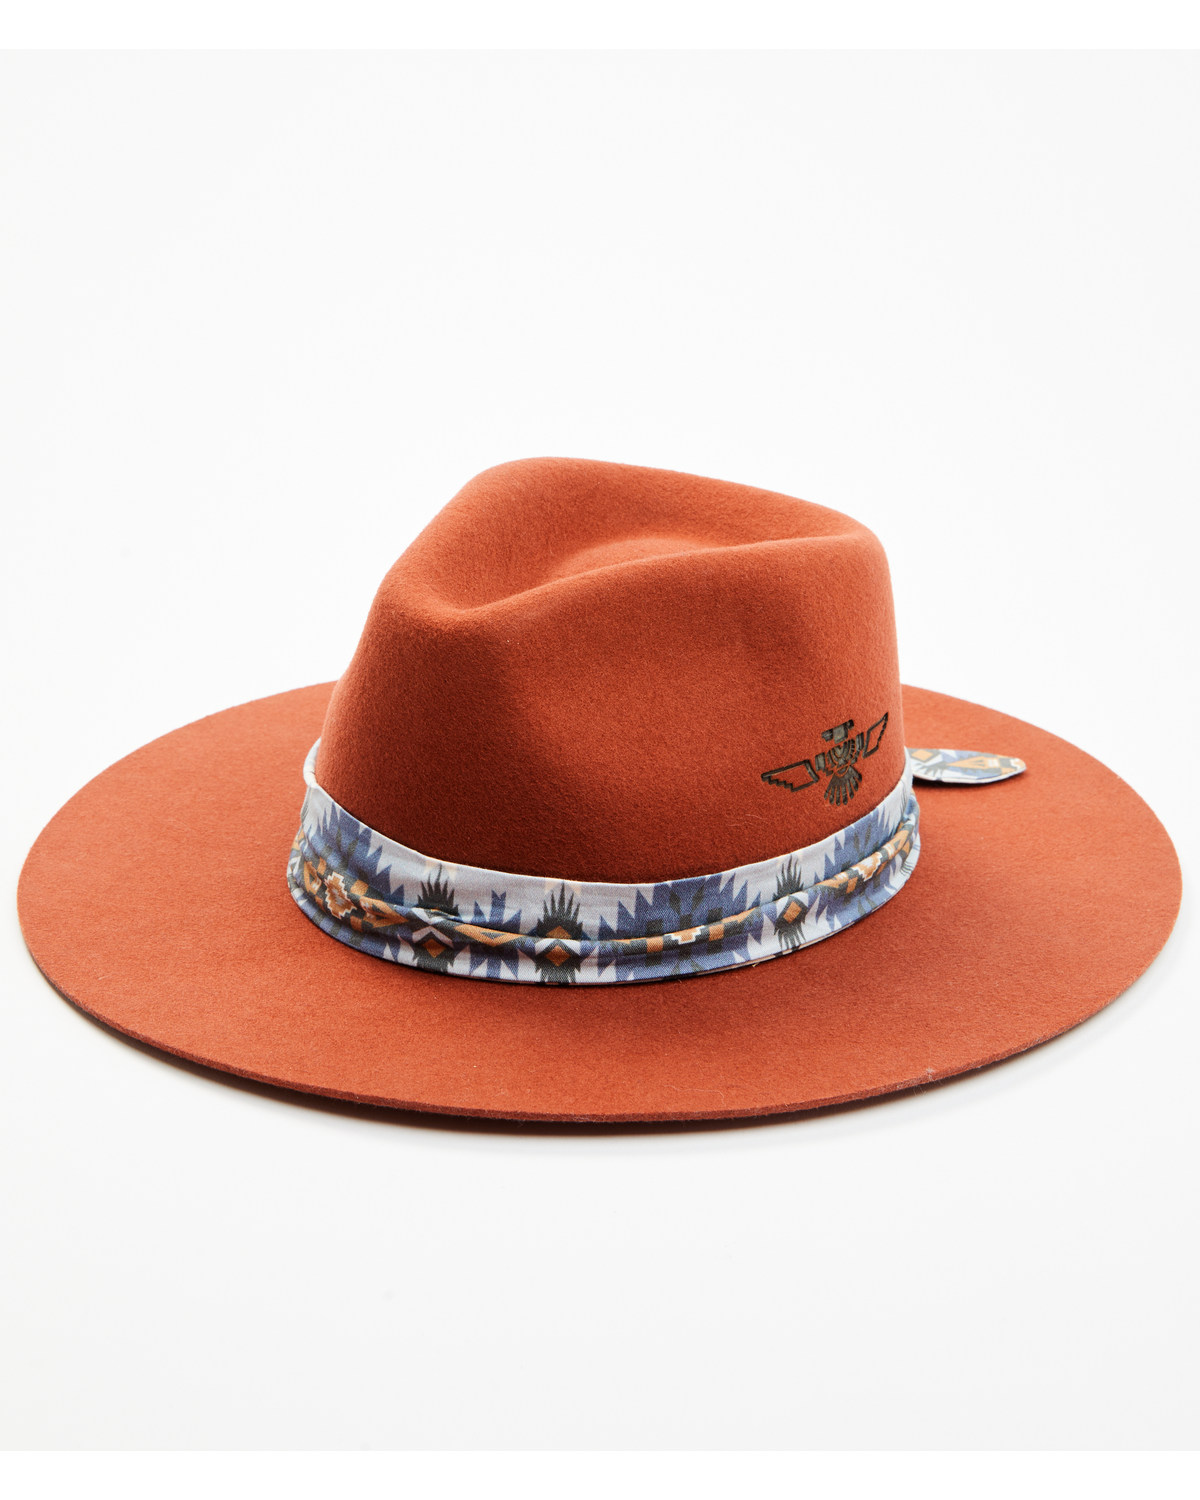 Idyllwind Women's Sarsaparilla Felt Western Fashion Hat